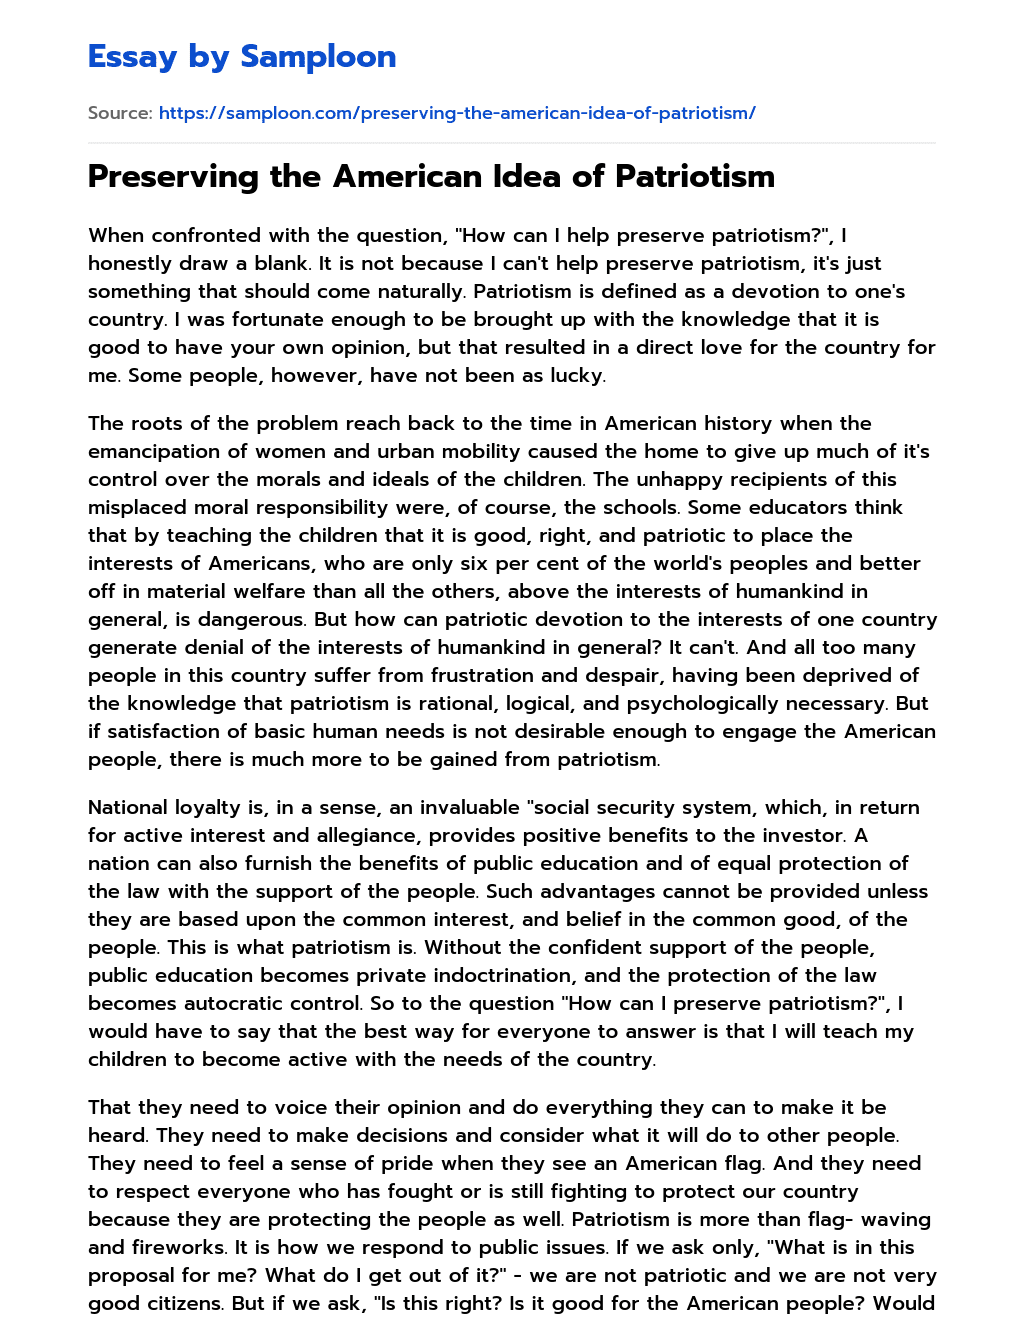 Preserving the American Idea of Patriotism essay